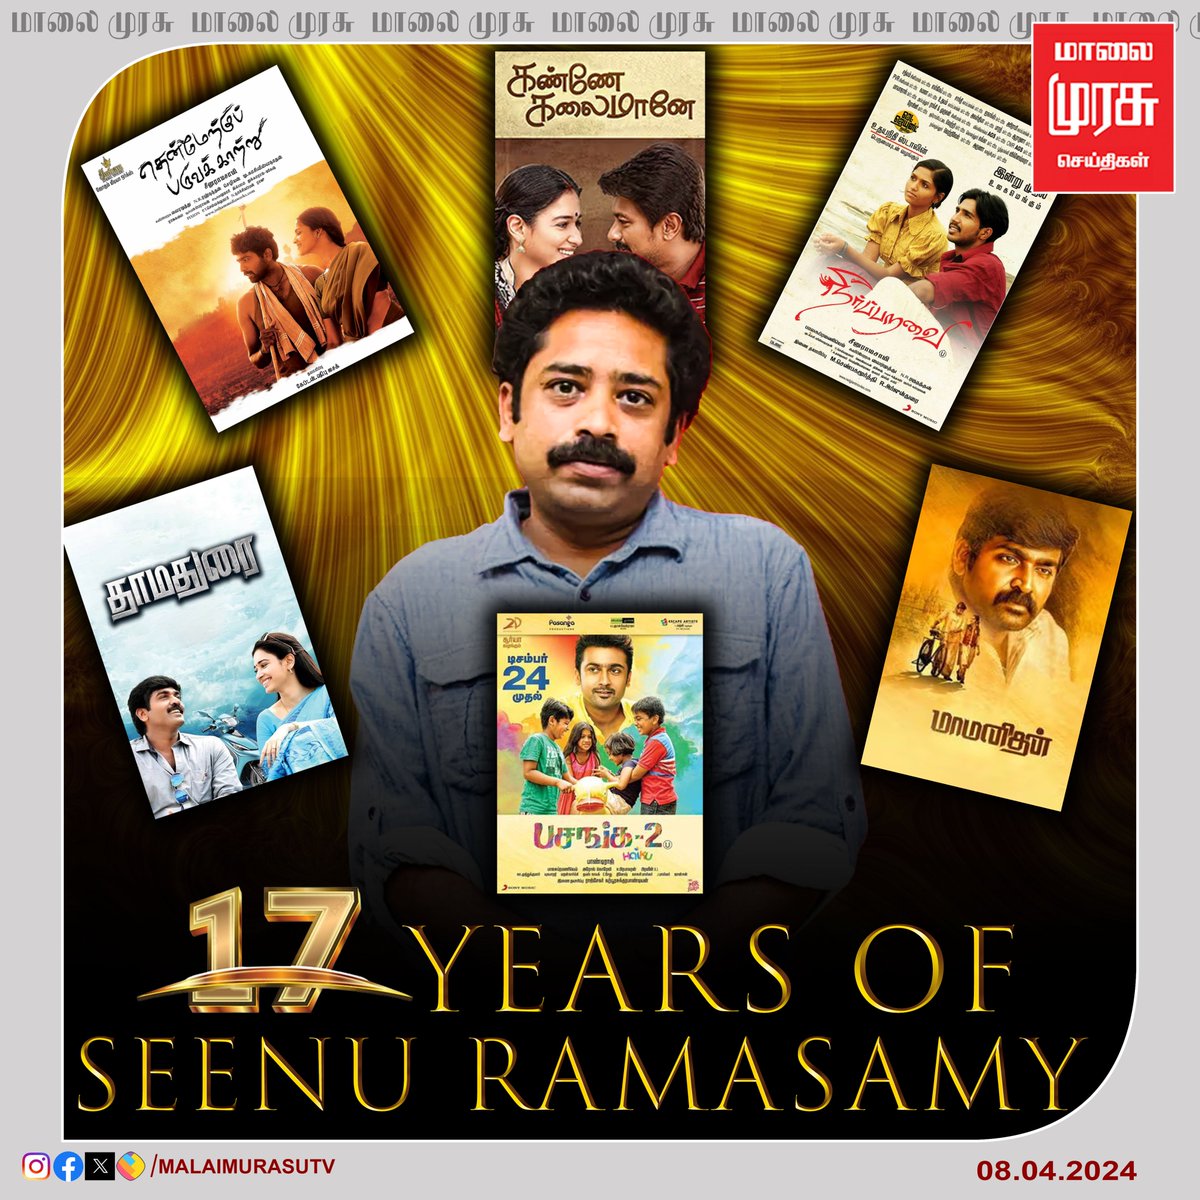 17 years of Seenu Ramasamy  

@seenuramasamy
#17yearsofseenuramasamy #TamilCinema #NEWSUPDATES #malaimurasu